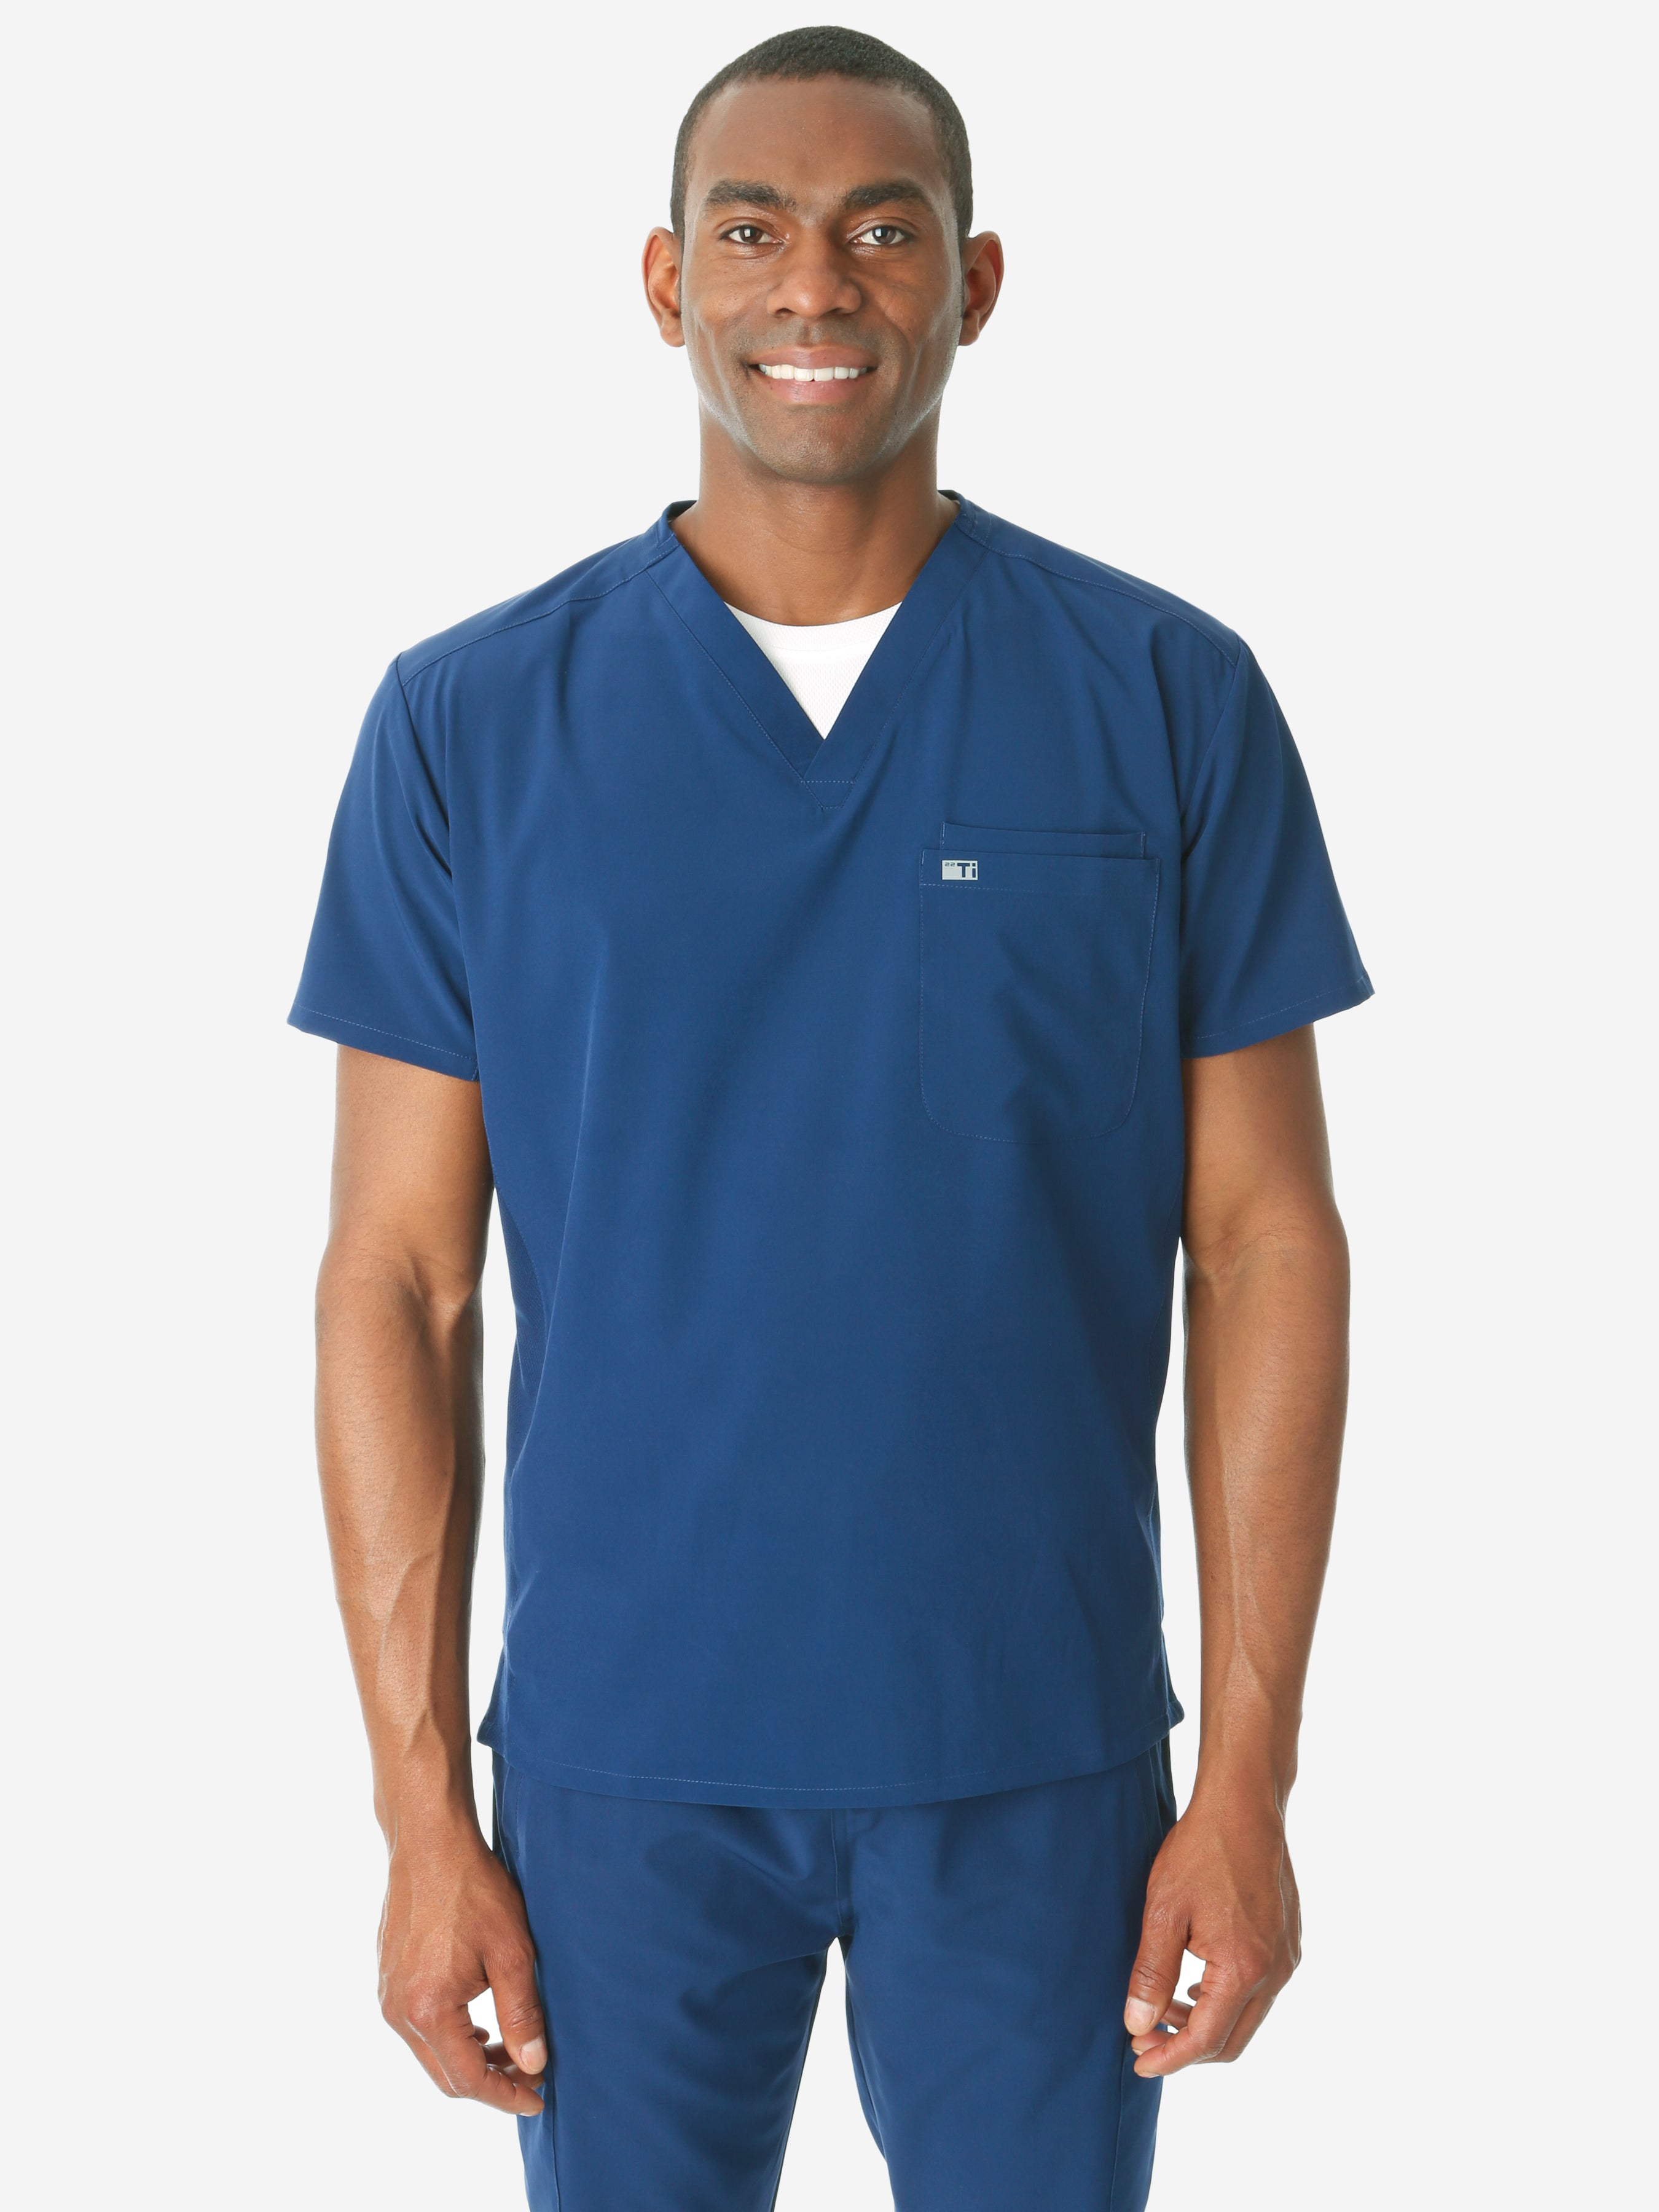 Underscrubs  The Best Scrub Undershirts for Medical Professionals – Tagged  Men – TiScrubs